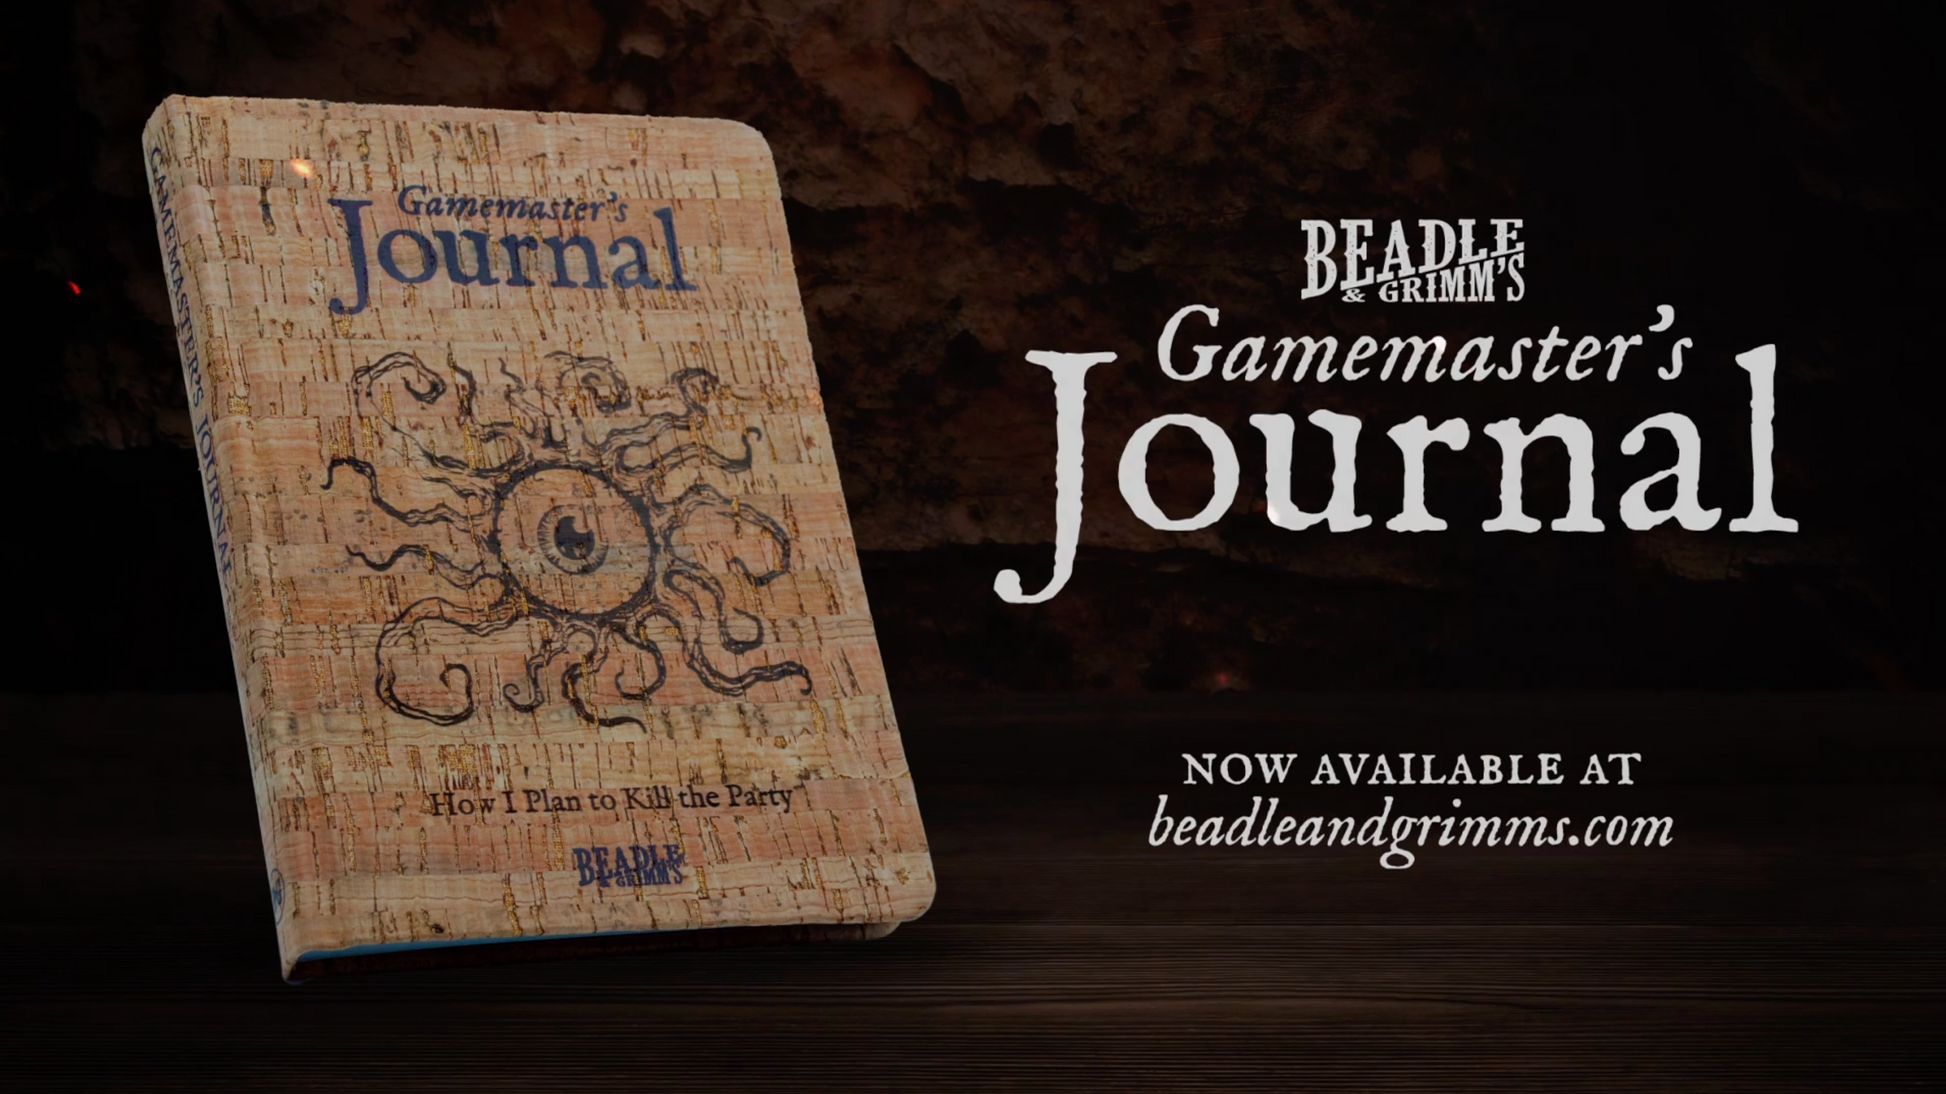 Beadle & Grimm's Gamemaster's Journal Explainer Video